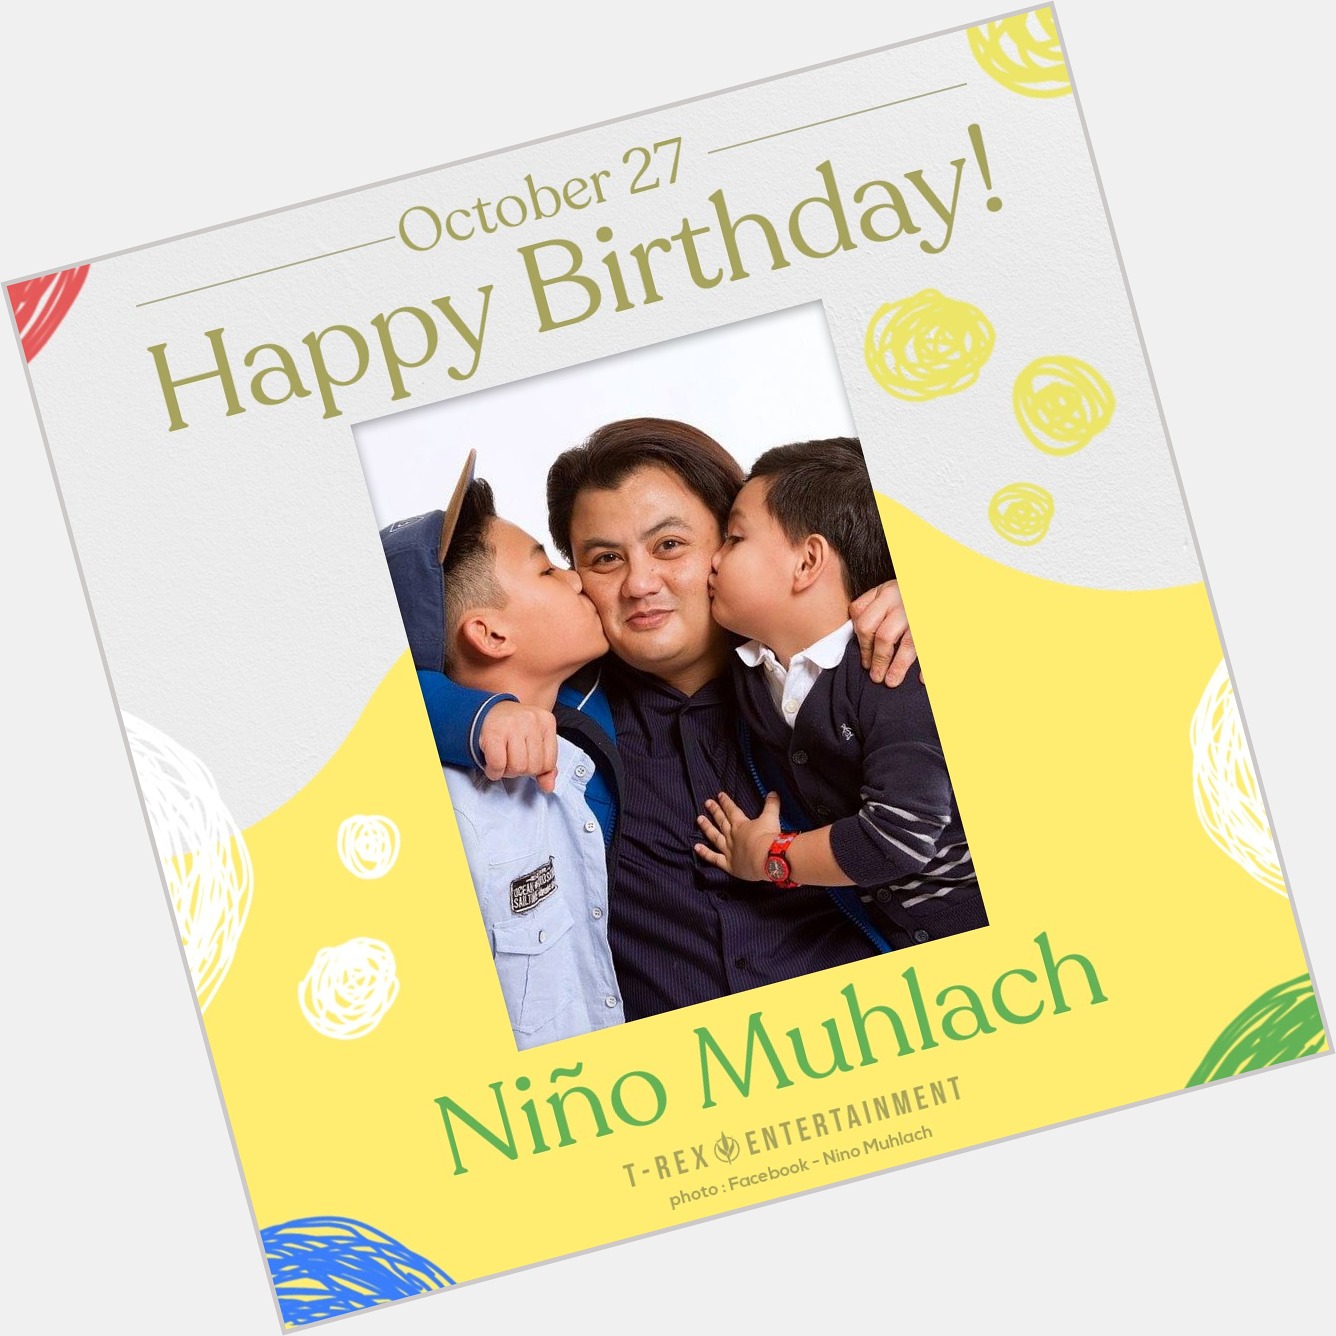 Wishing Niño Muhlach a happy birthday! He turns 49 today. 